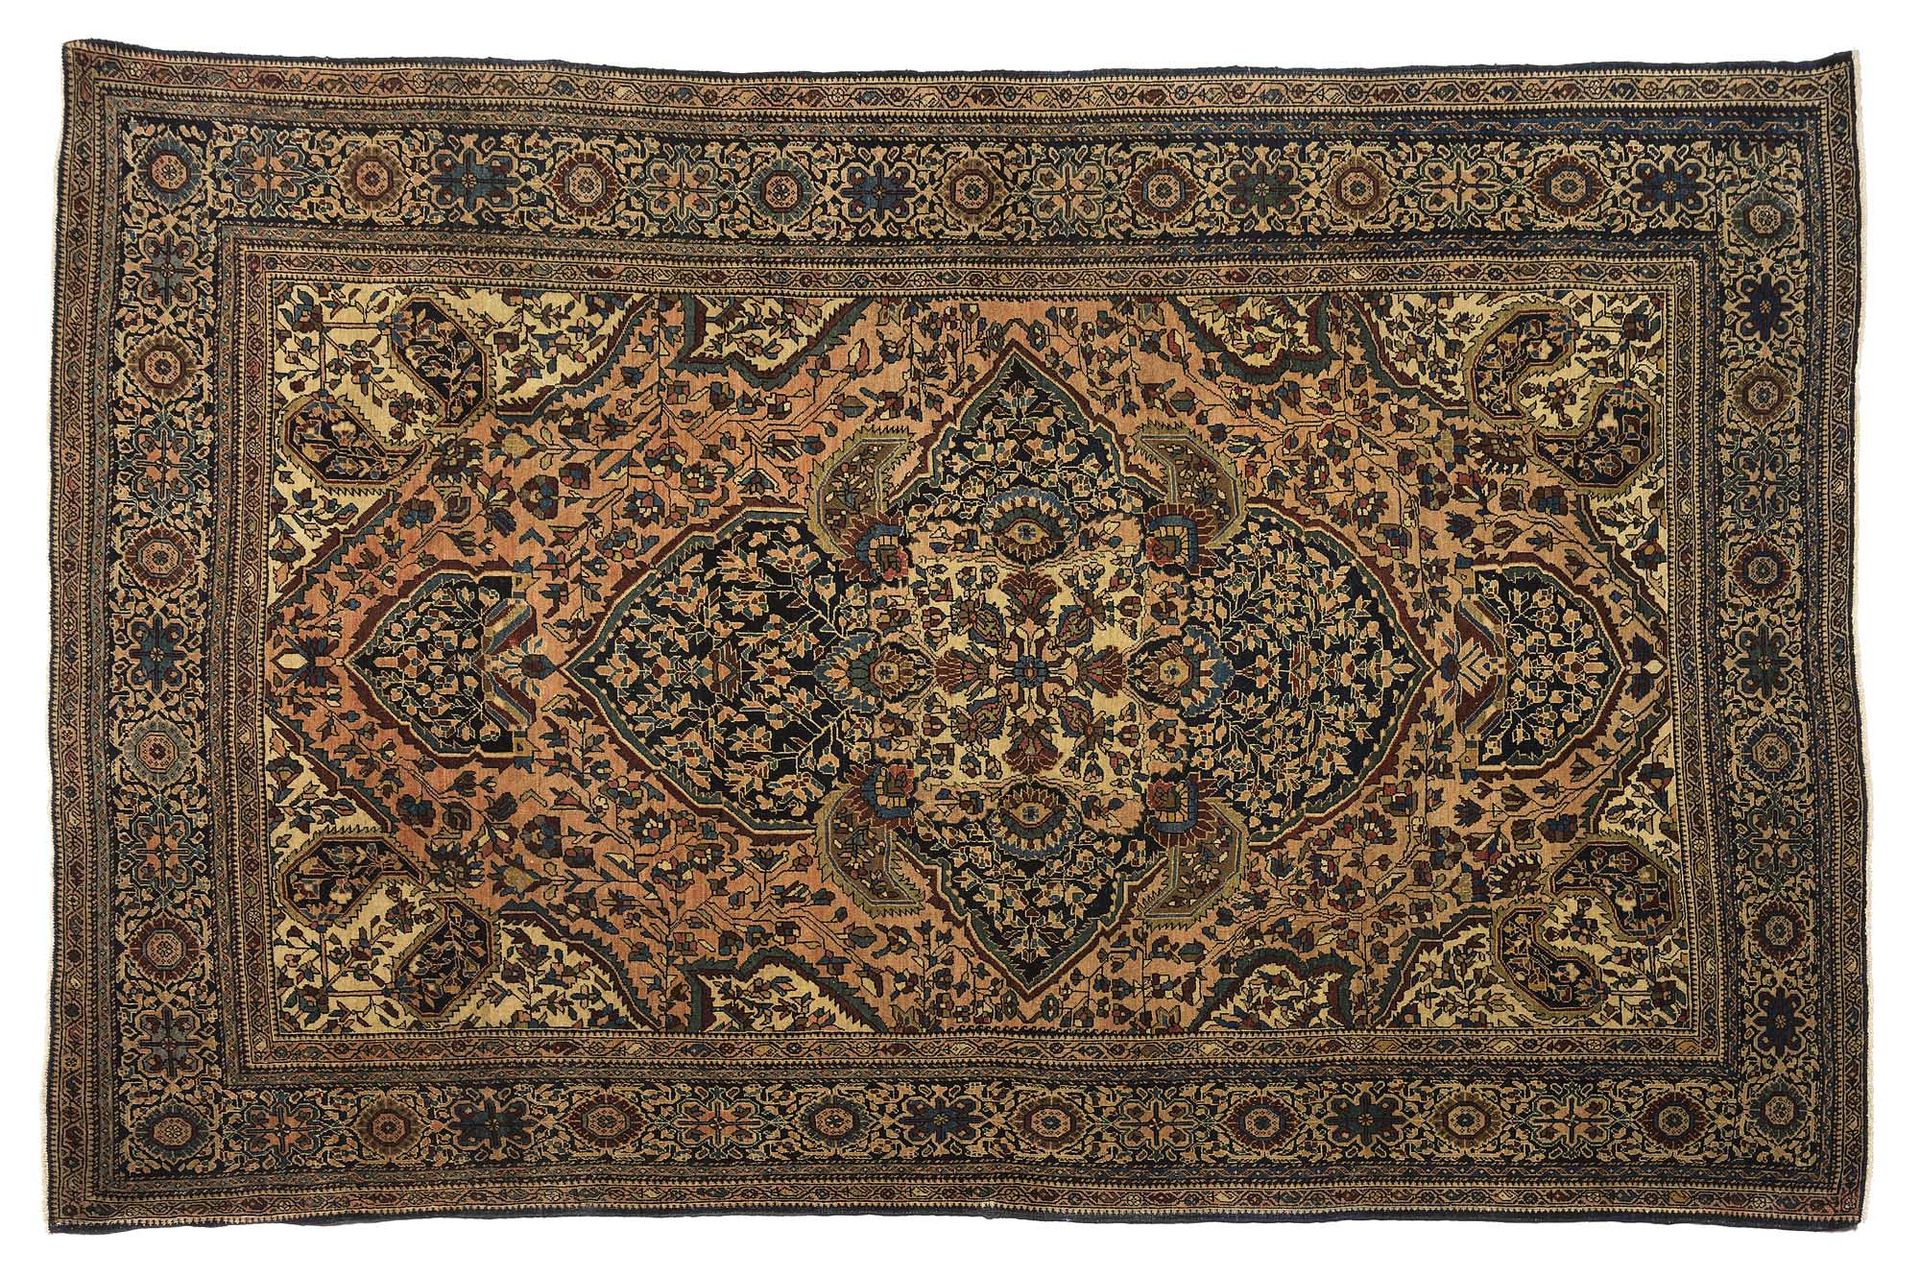 Null Alfombra SAROUK (Persia), finales del siglo XIX

Dimensiones : 192 x 121cm
&hellip;